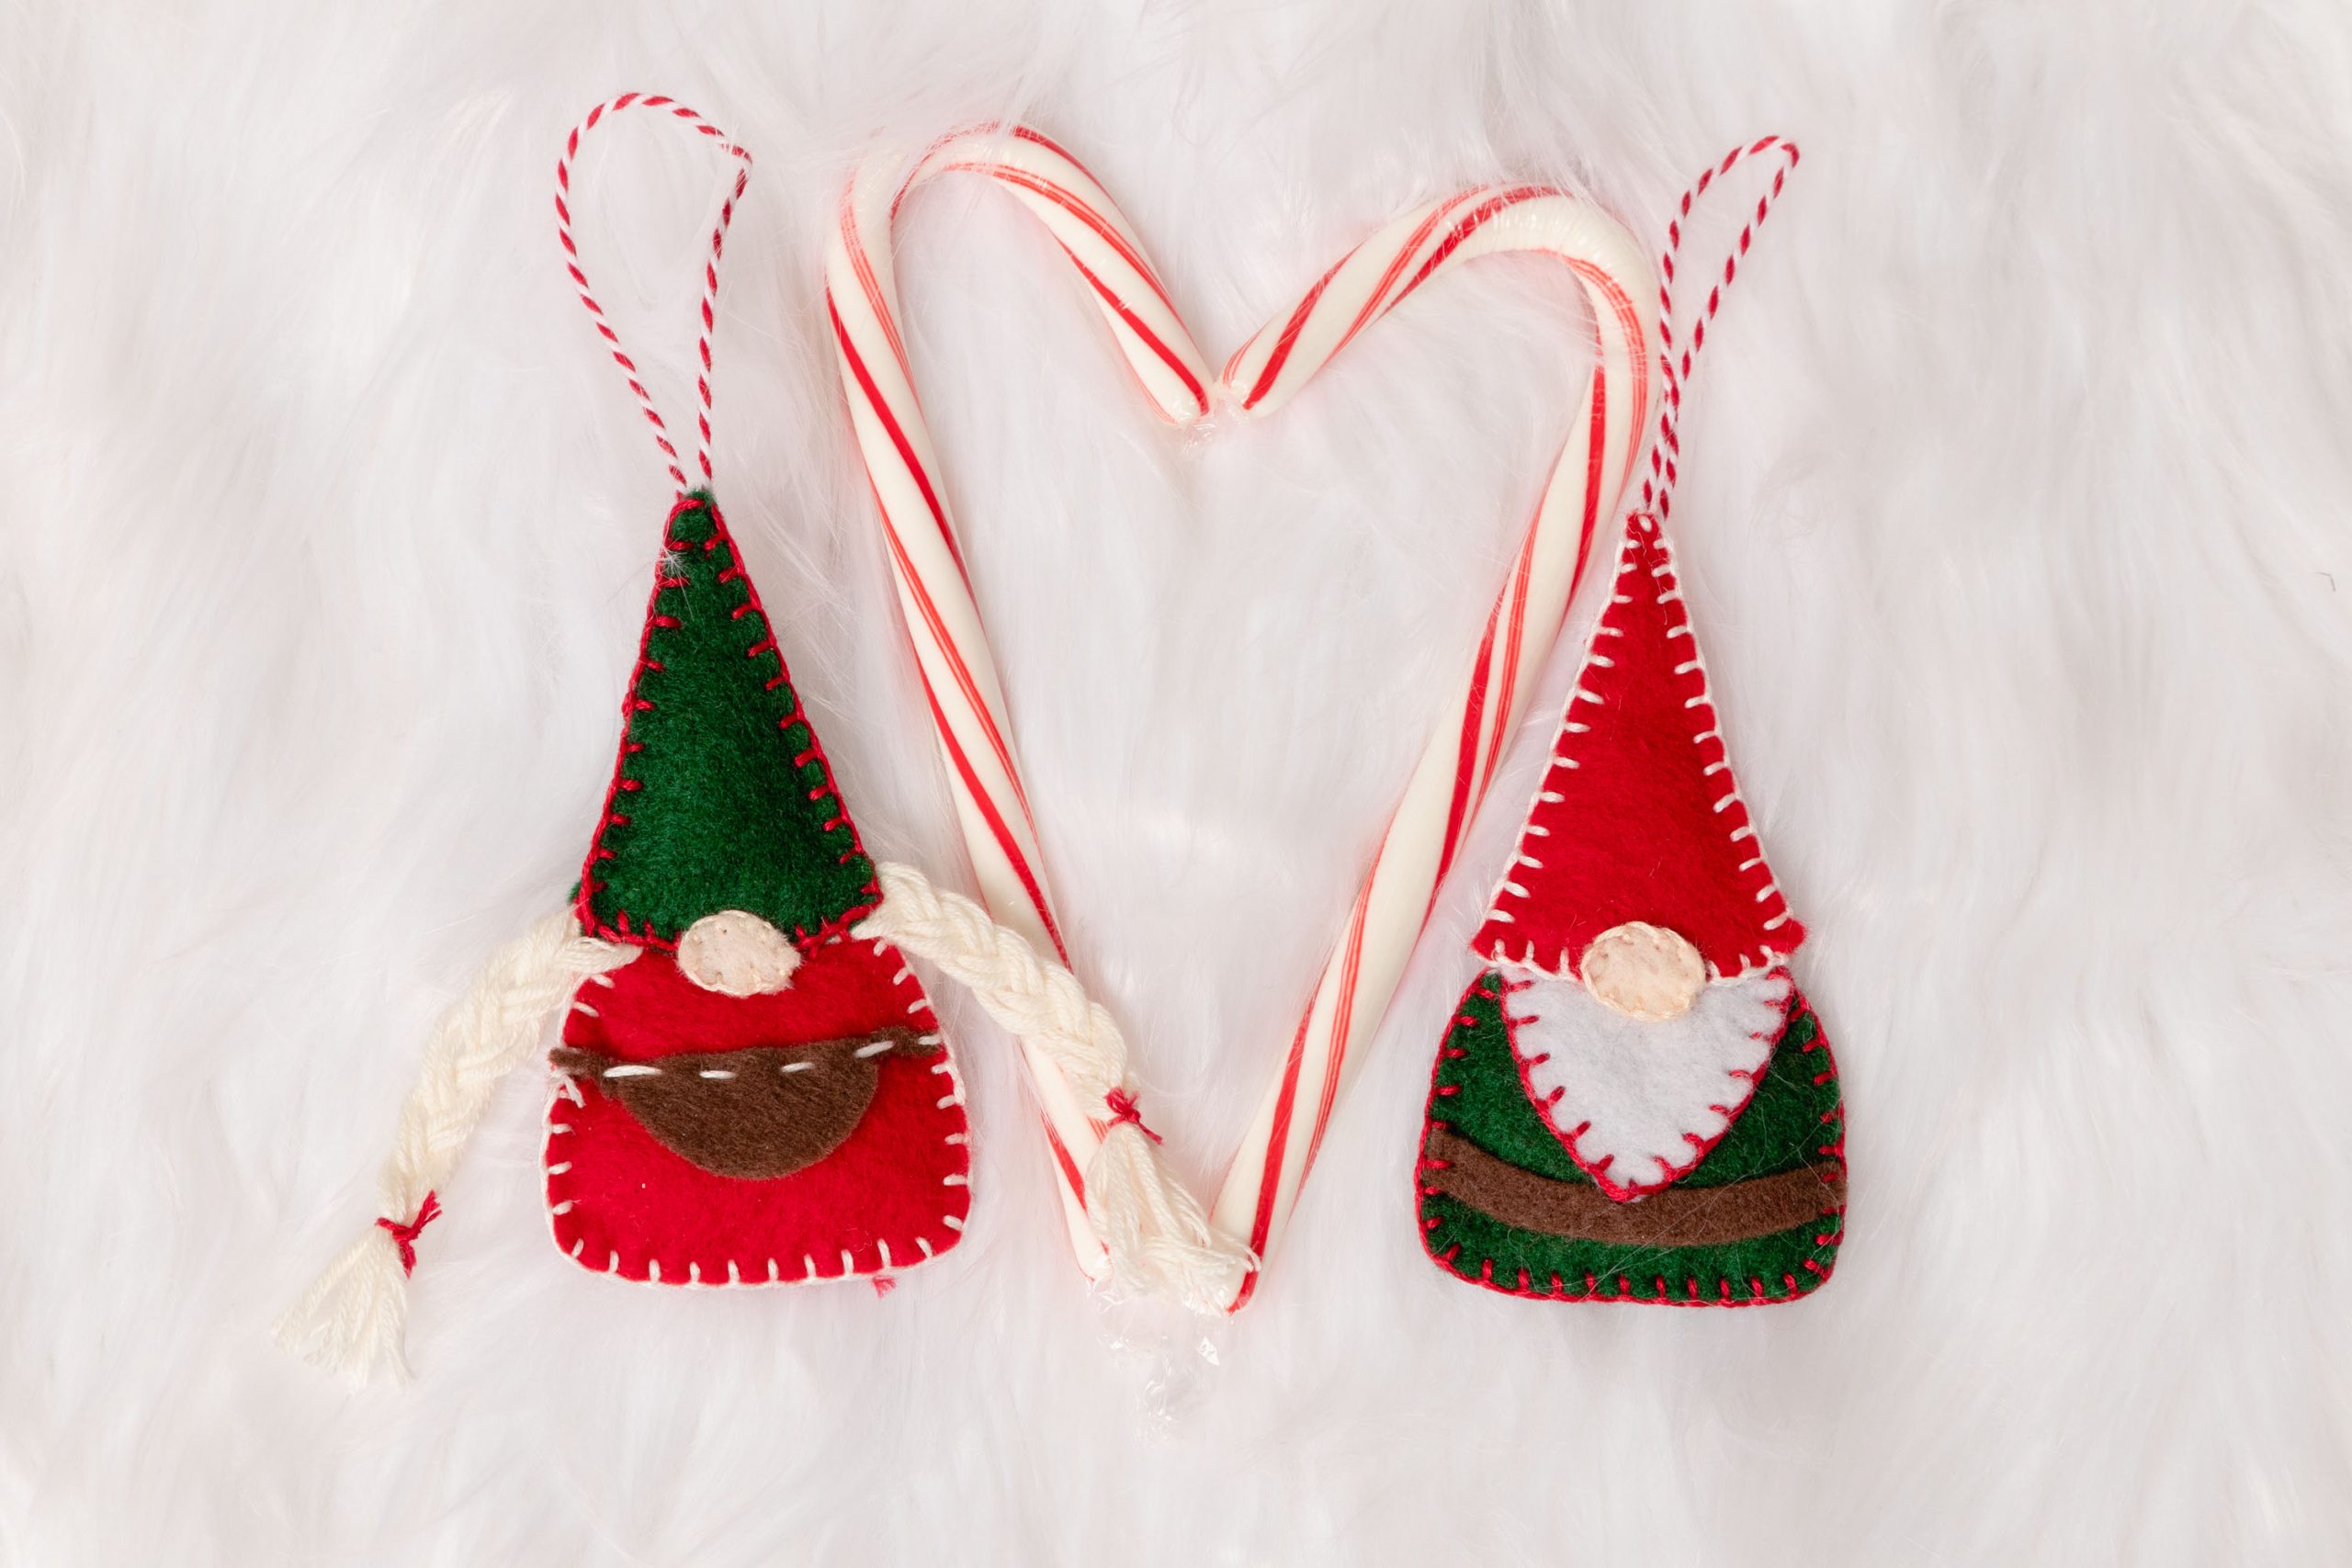 Easy Felt Christmas Ornaments, Felt Decorations to Make, Gnomes